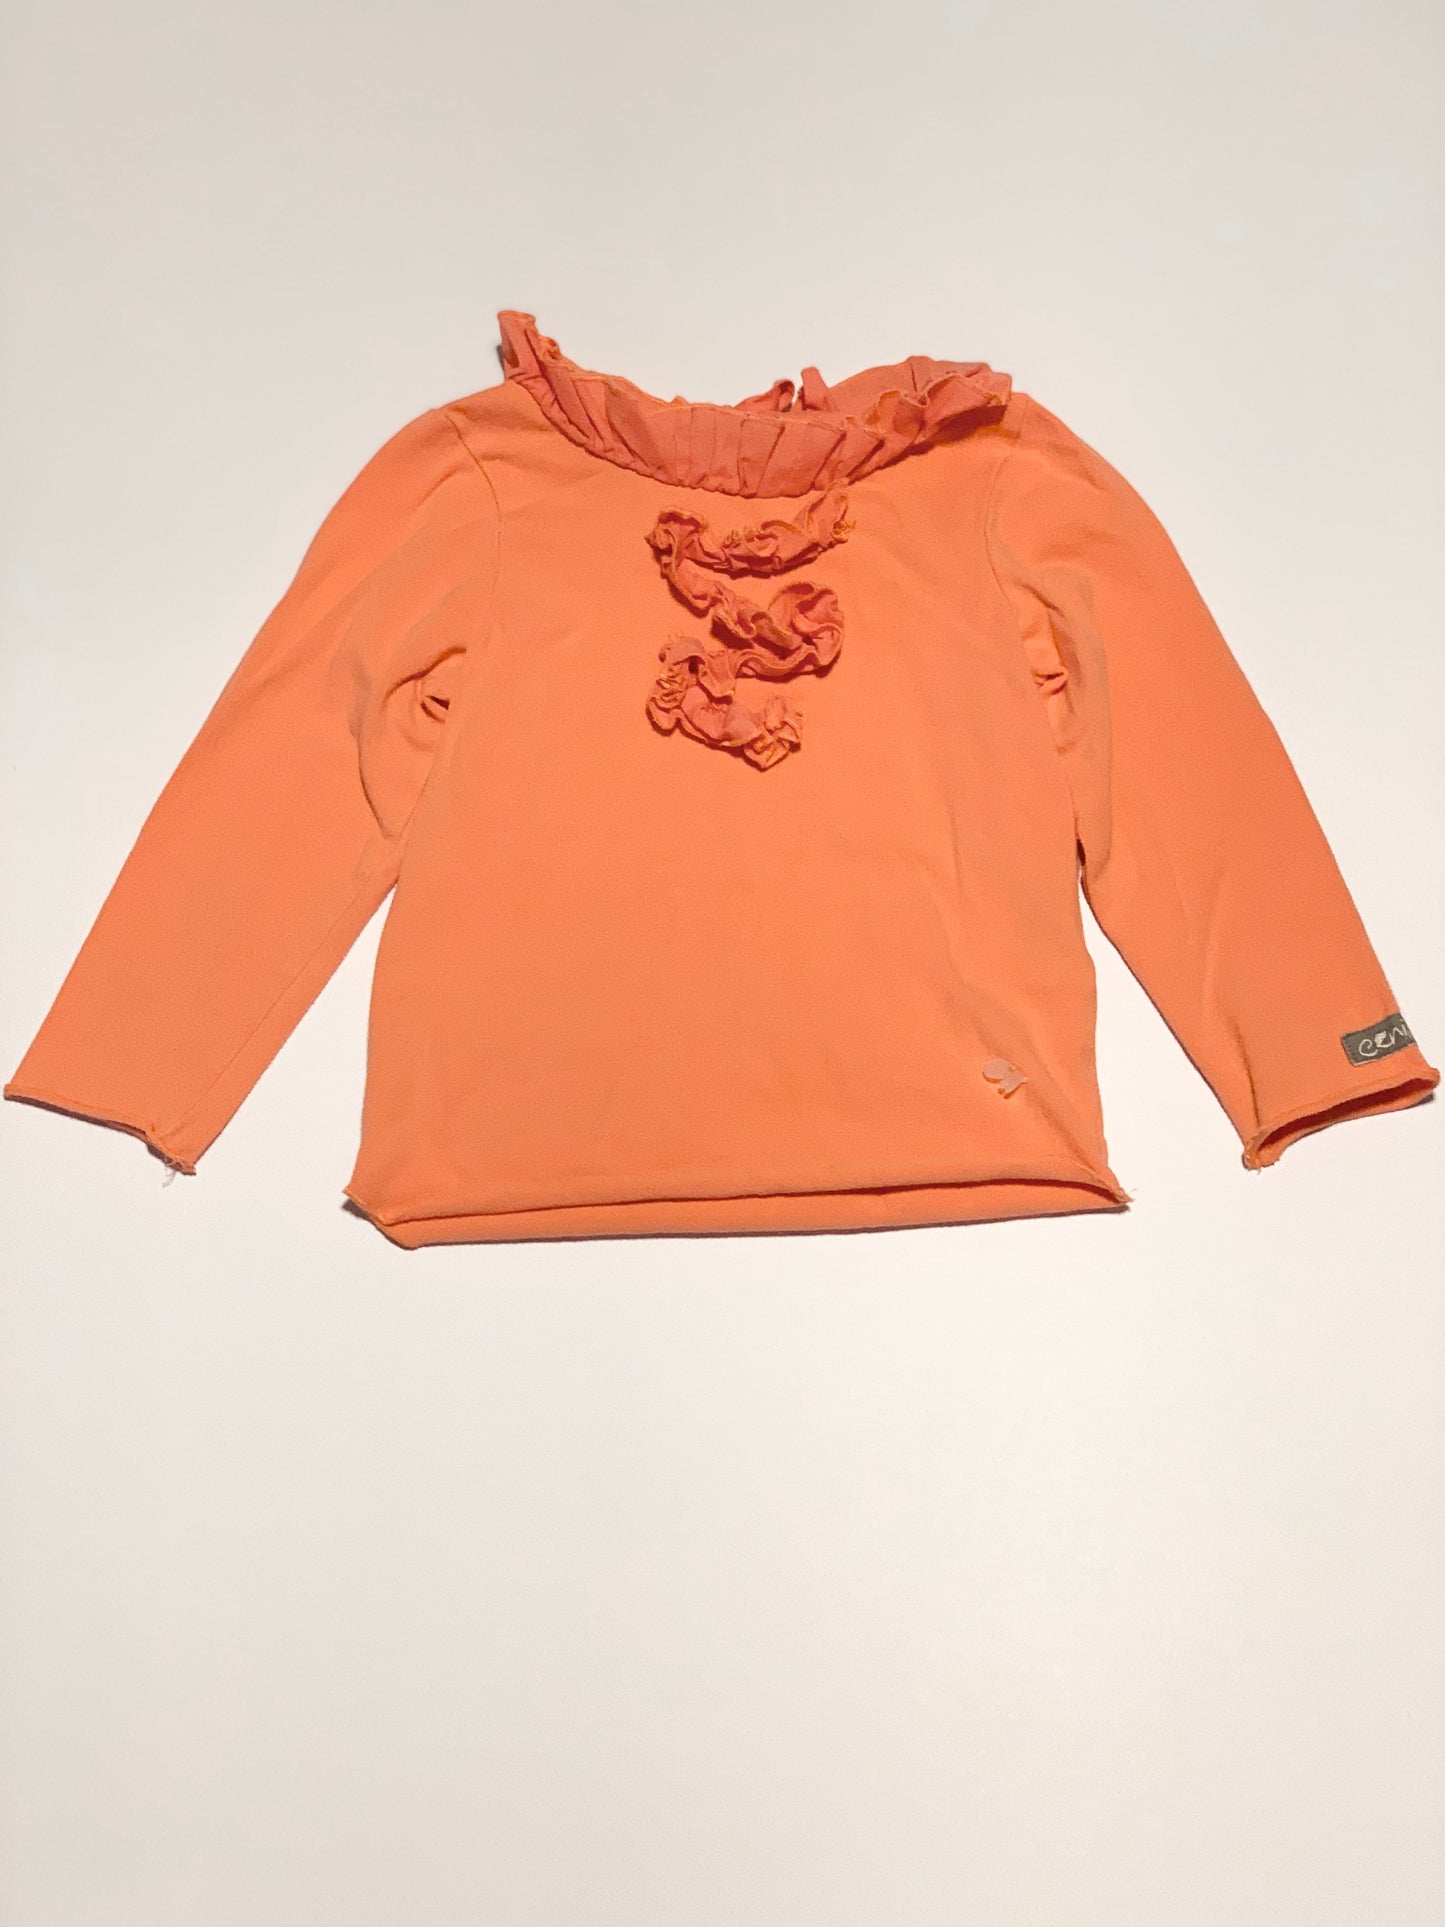 Orange frill top - Size 18-24 months